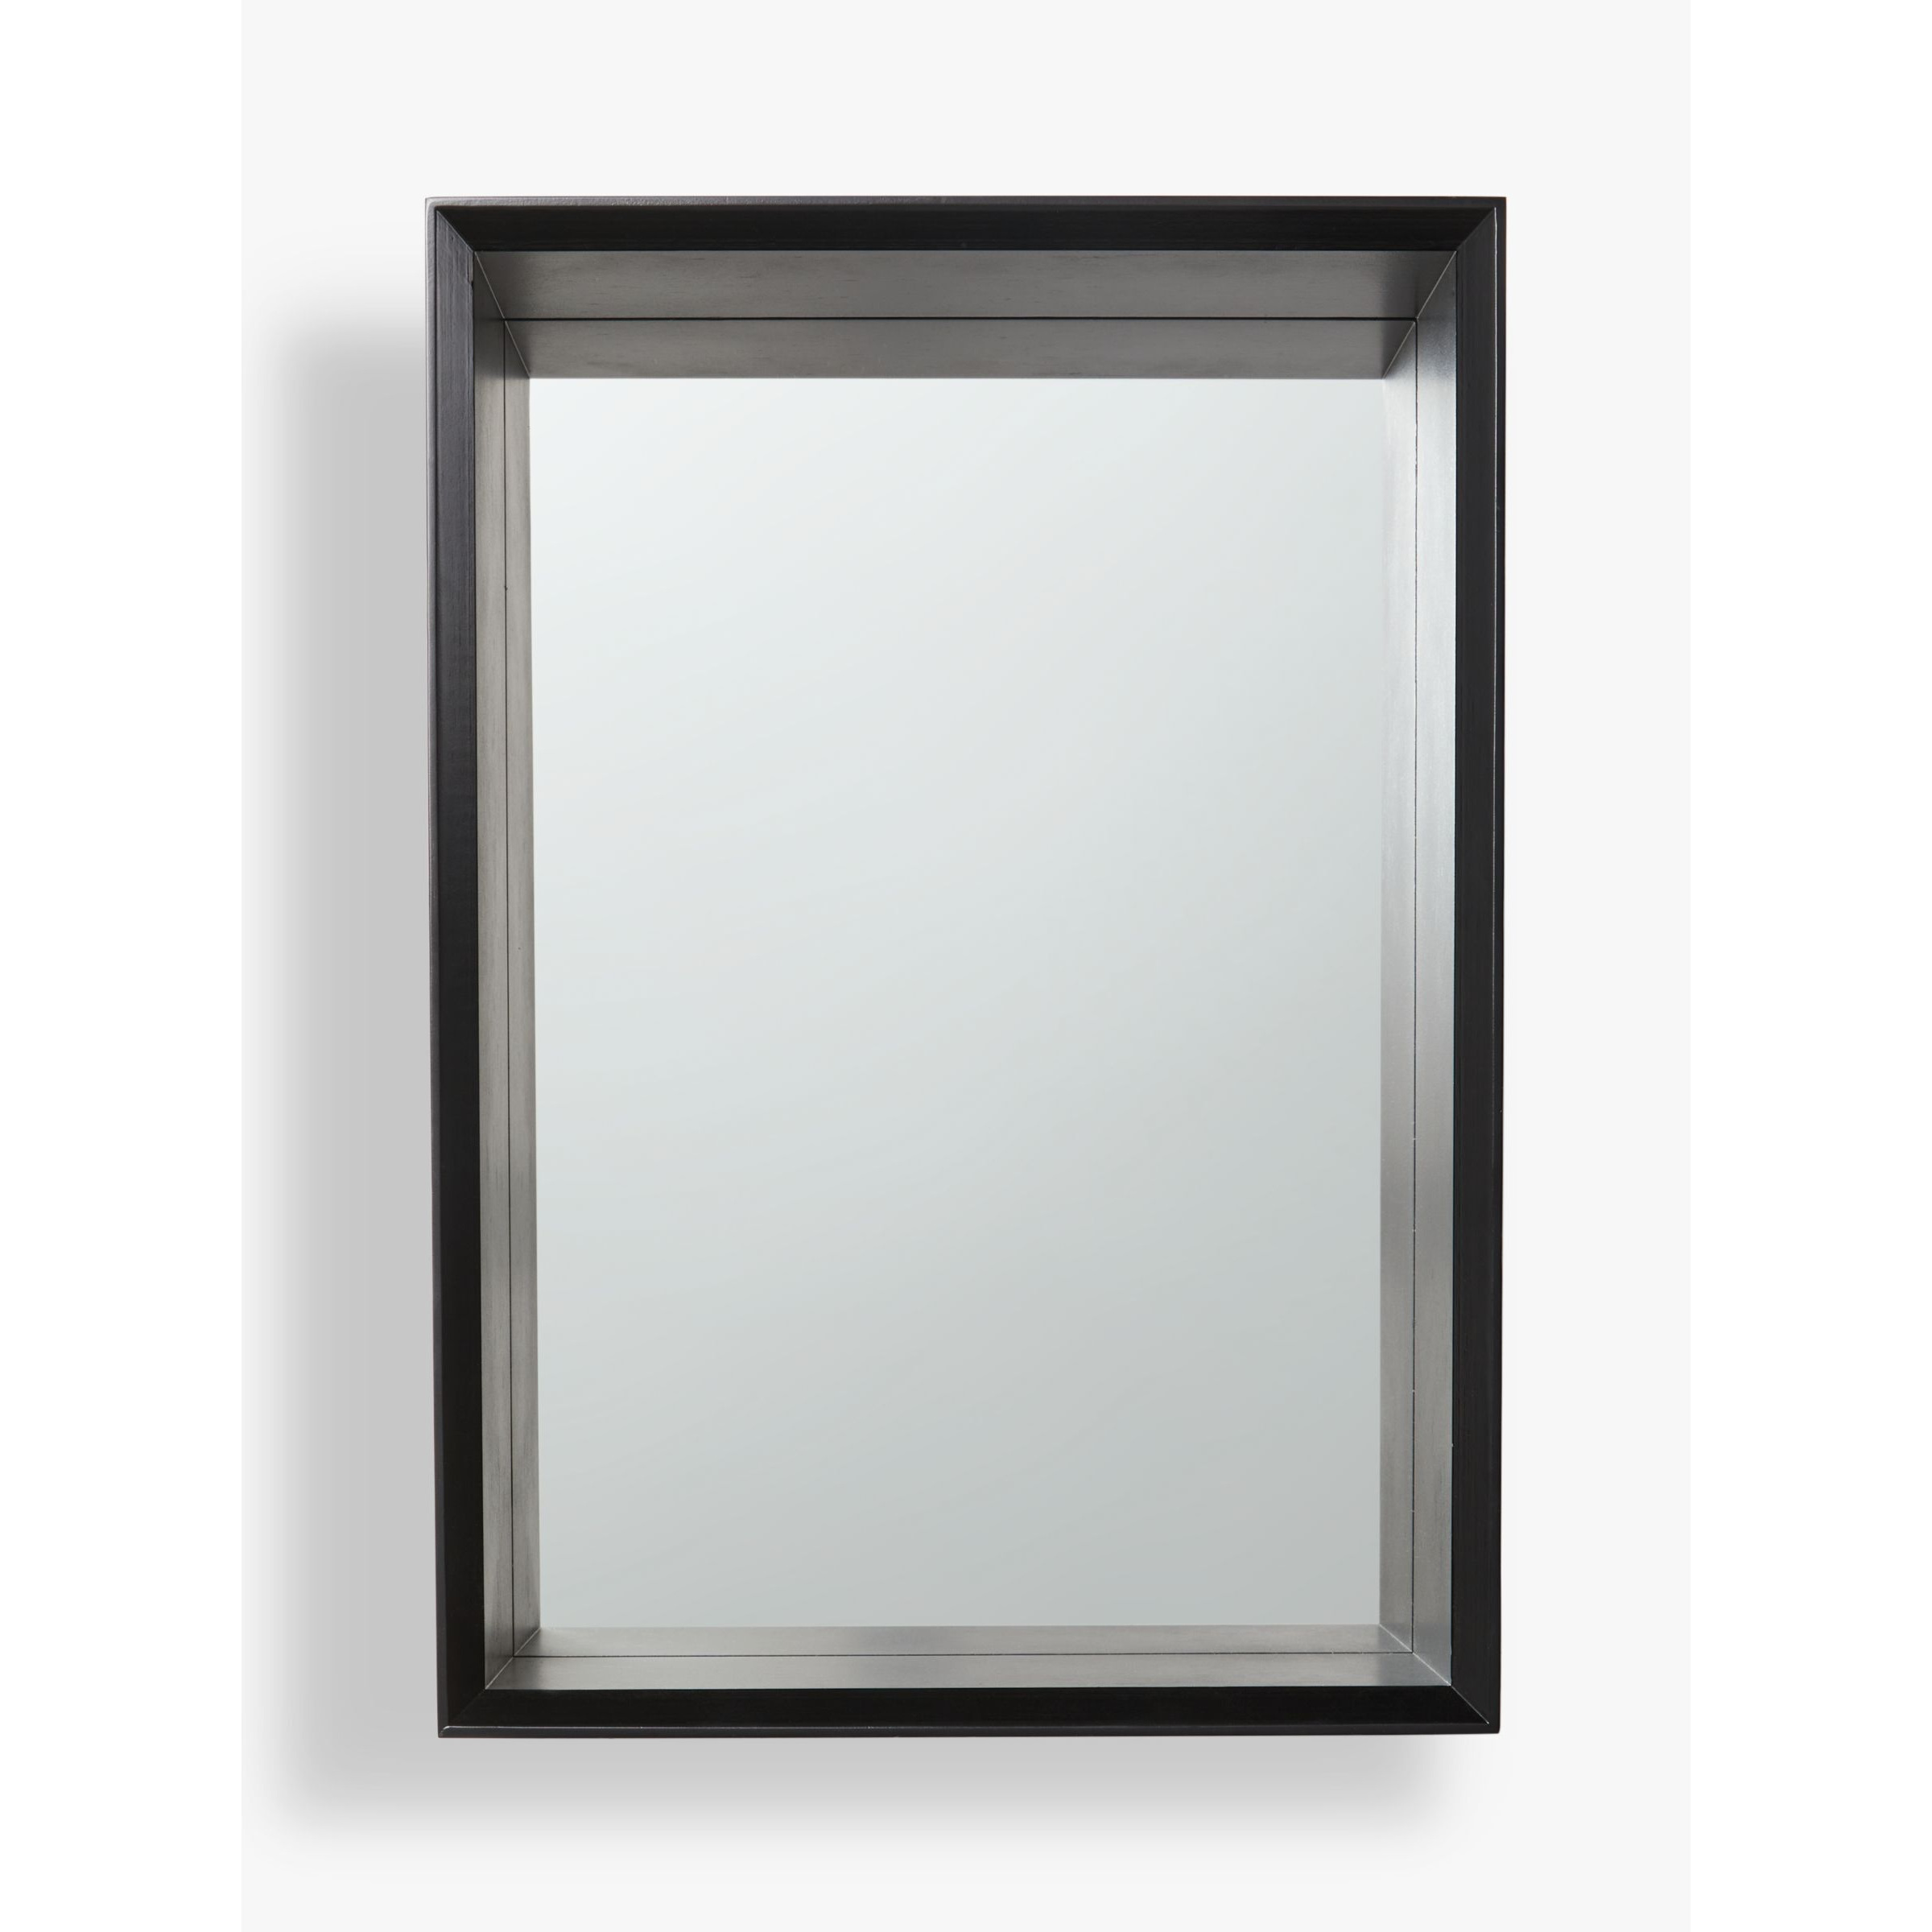 John Lewis Wood Framed Bathroom Storage Mirror - image 1